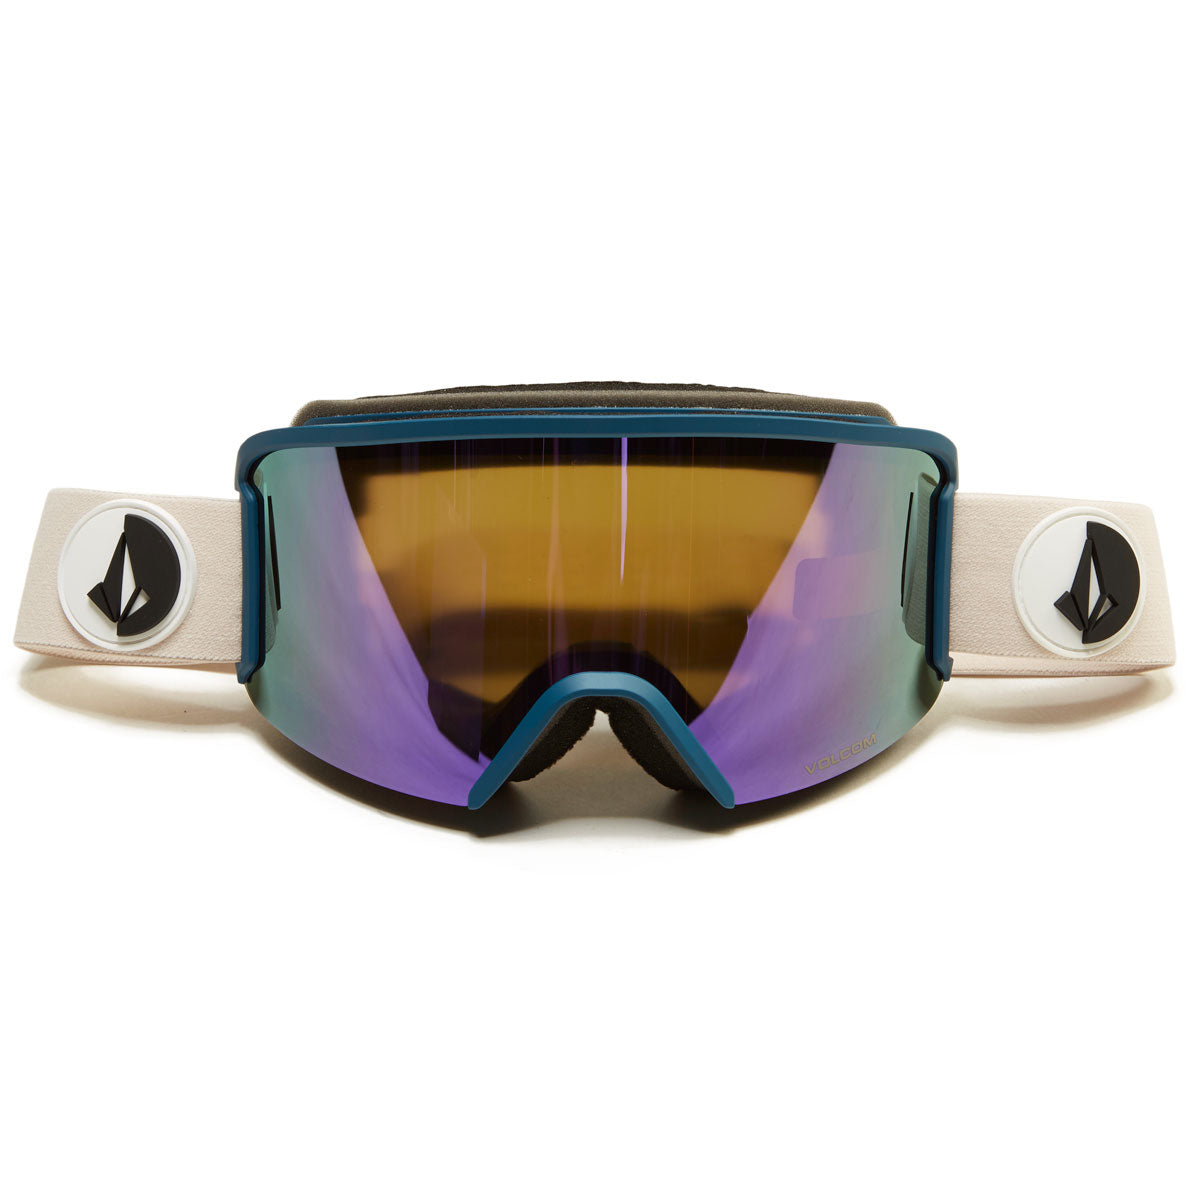 Volcom Garden Snowboard Goggles - Party Pink/Slate Blue/Purple Chrome image 1